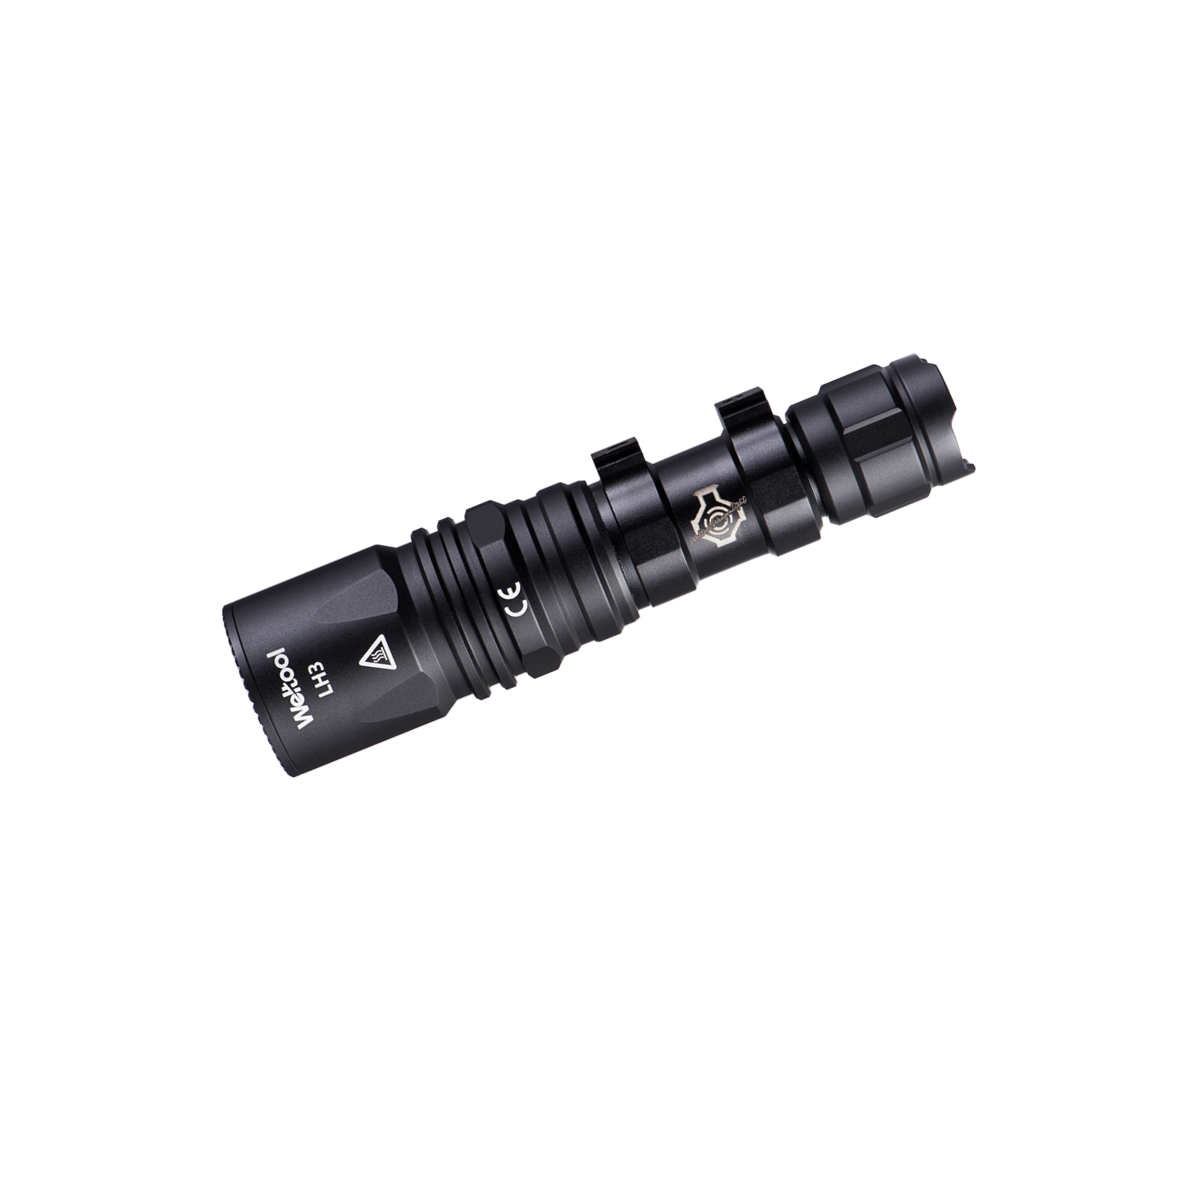 Weltool W35lep “Metal Lancer” Weapon mount light LEP Flashlight USA Direct!